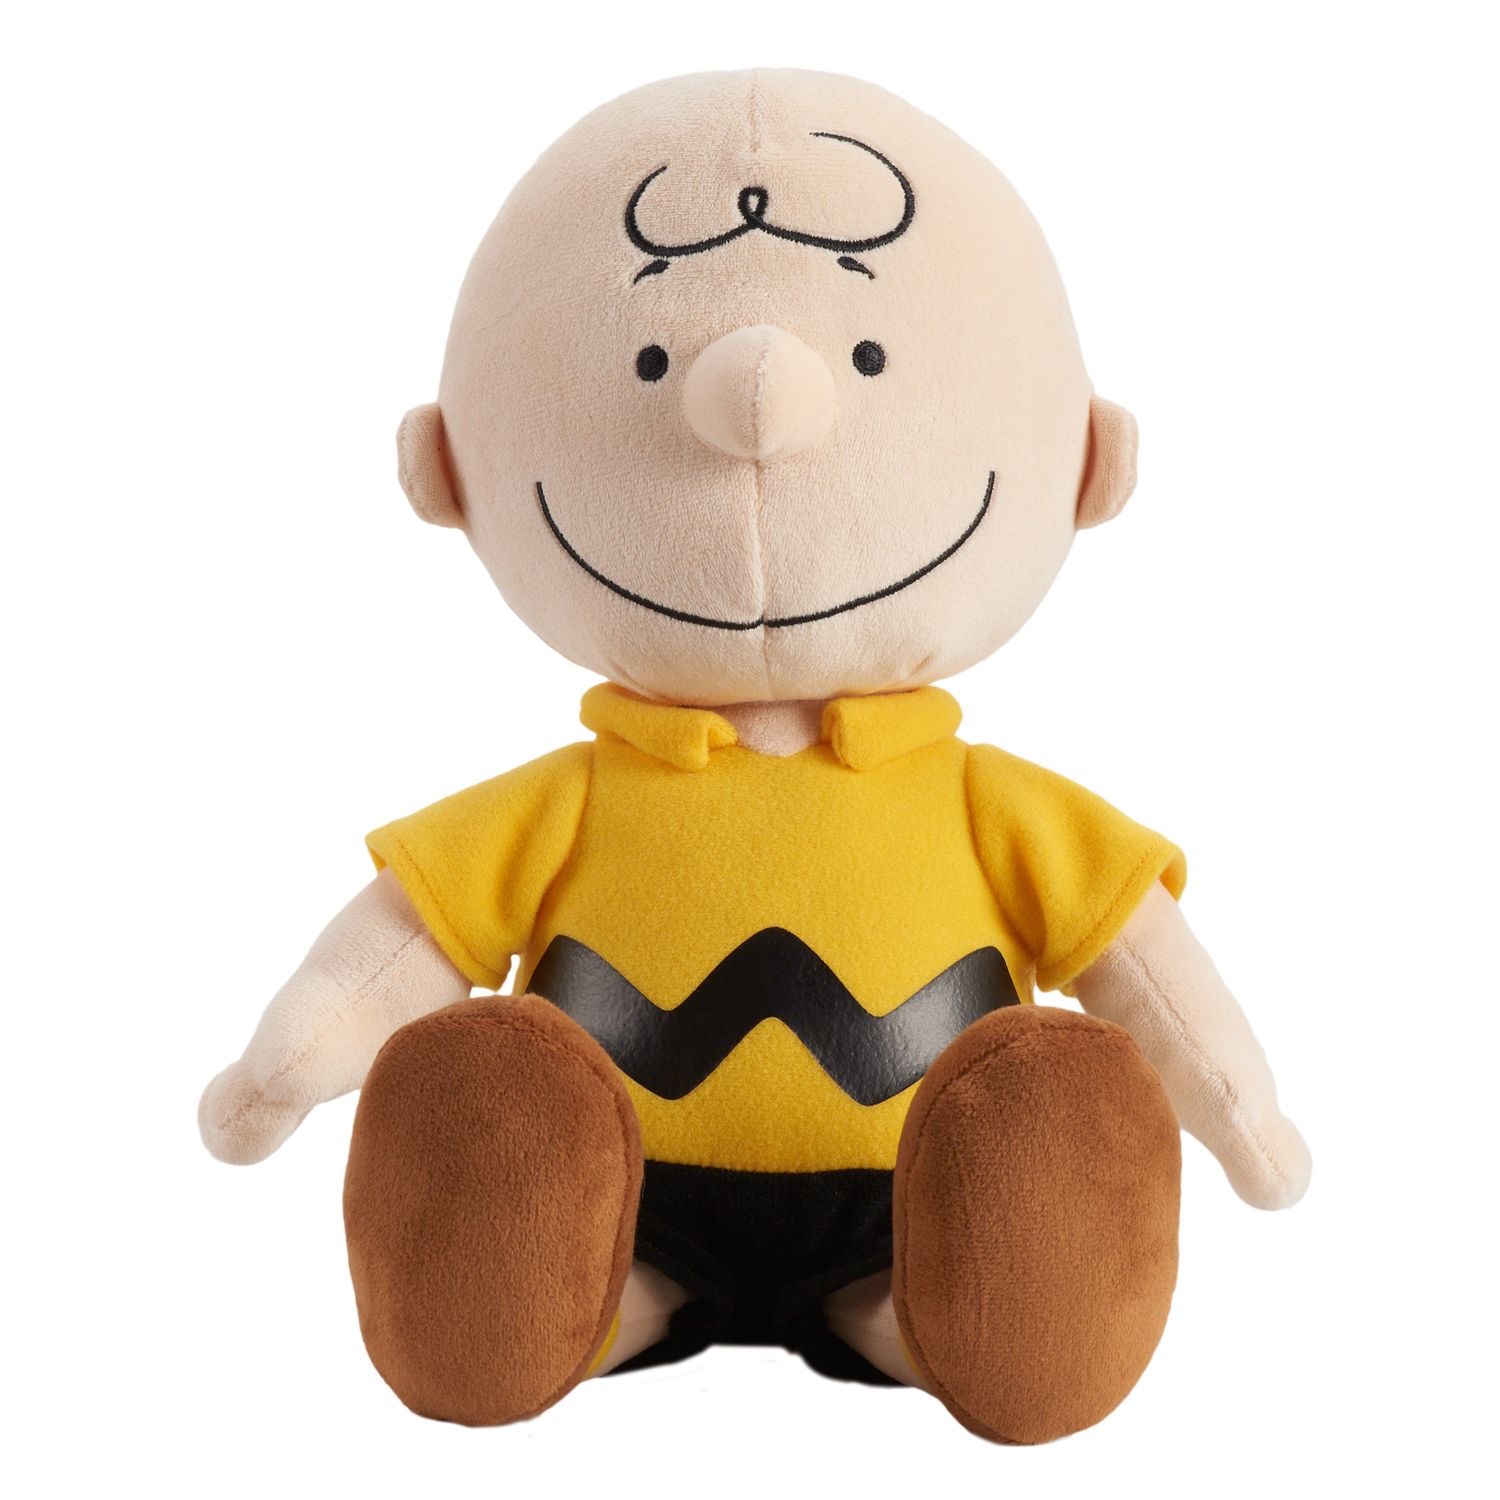 peanuts characters plush toys